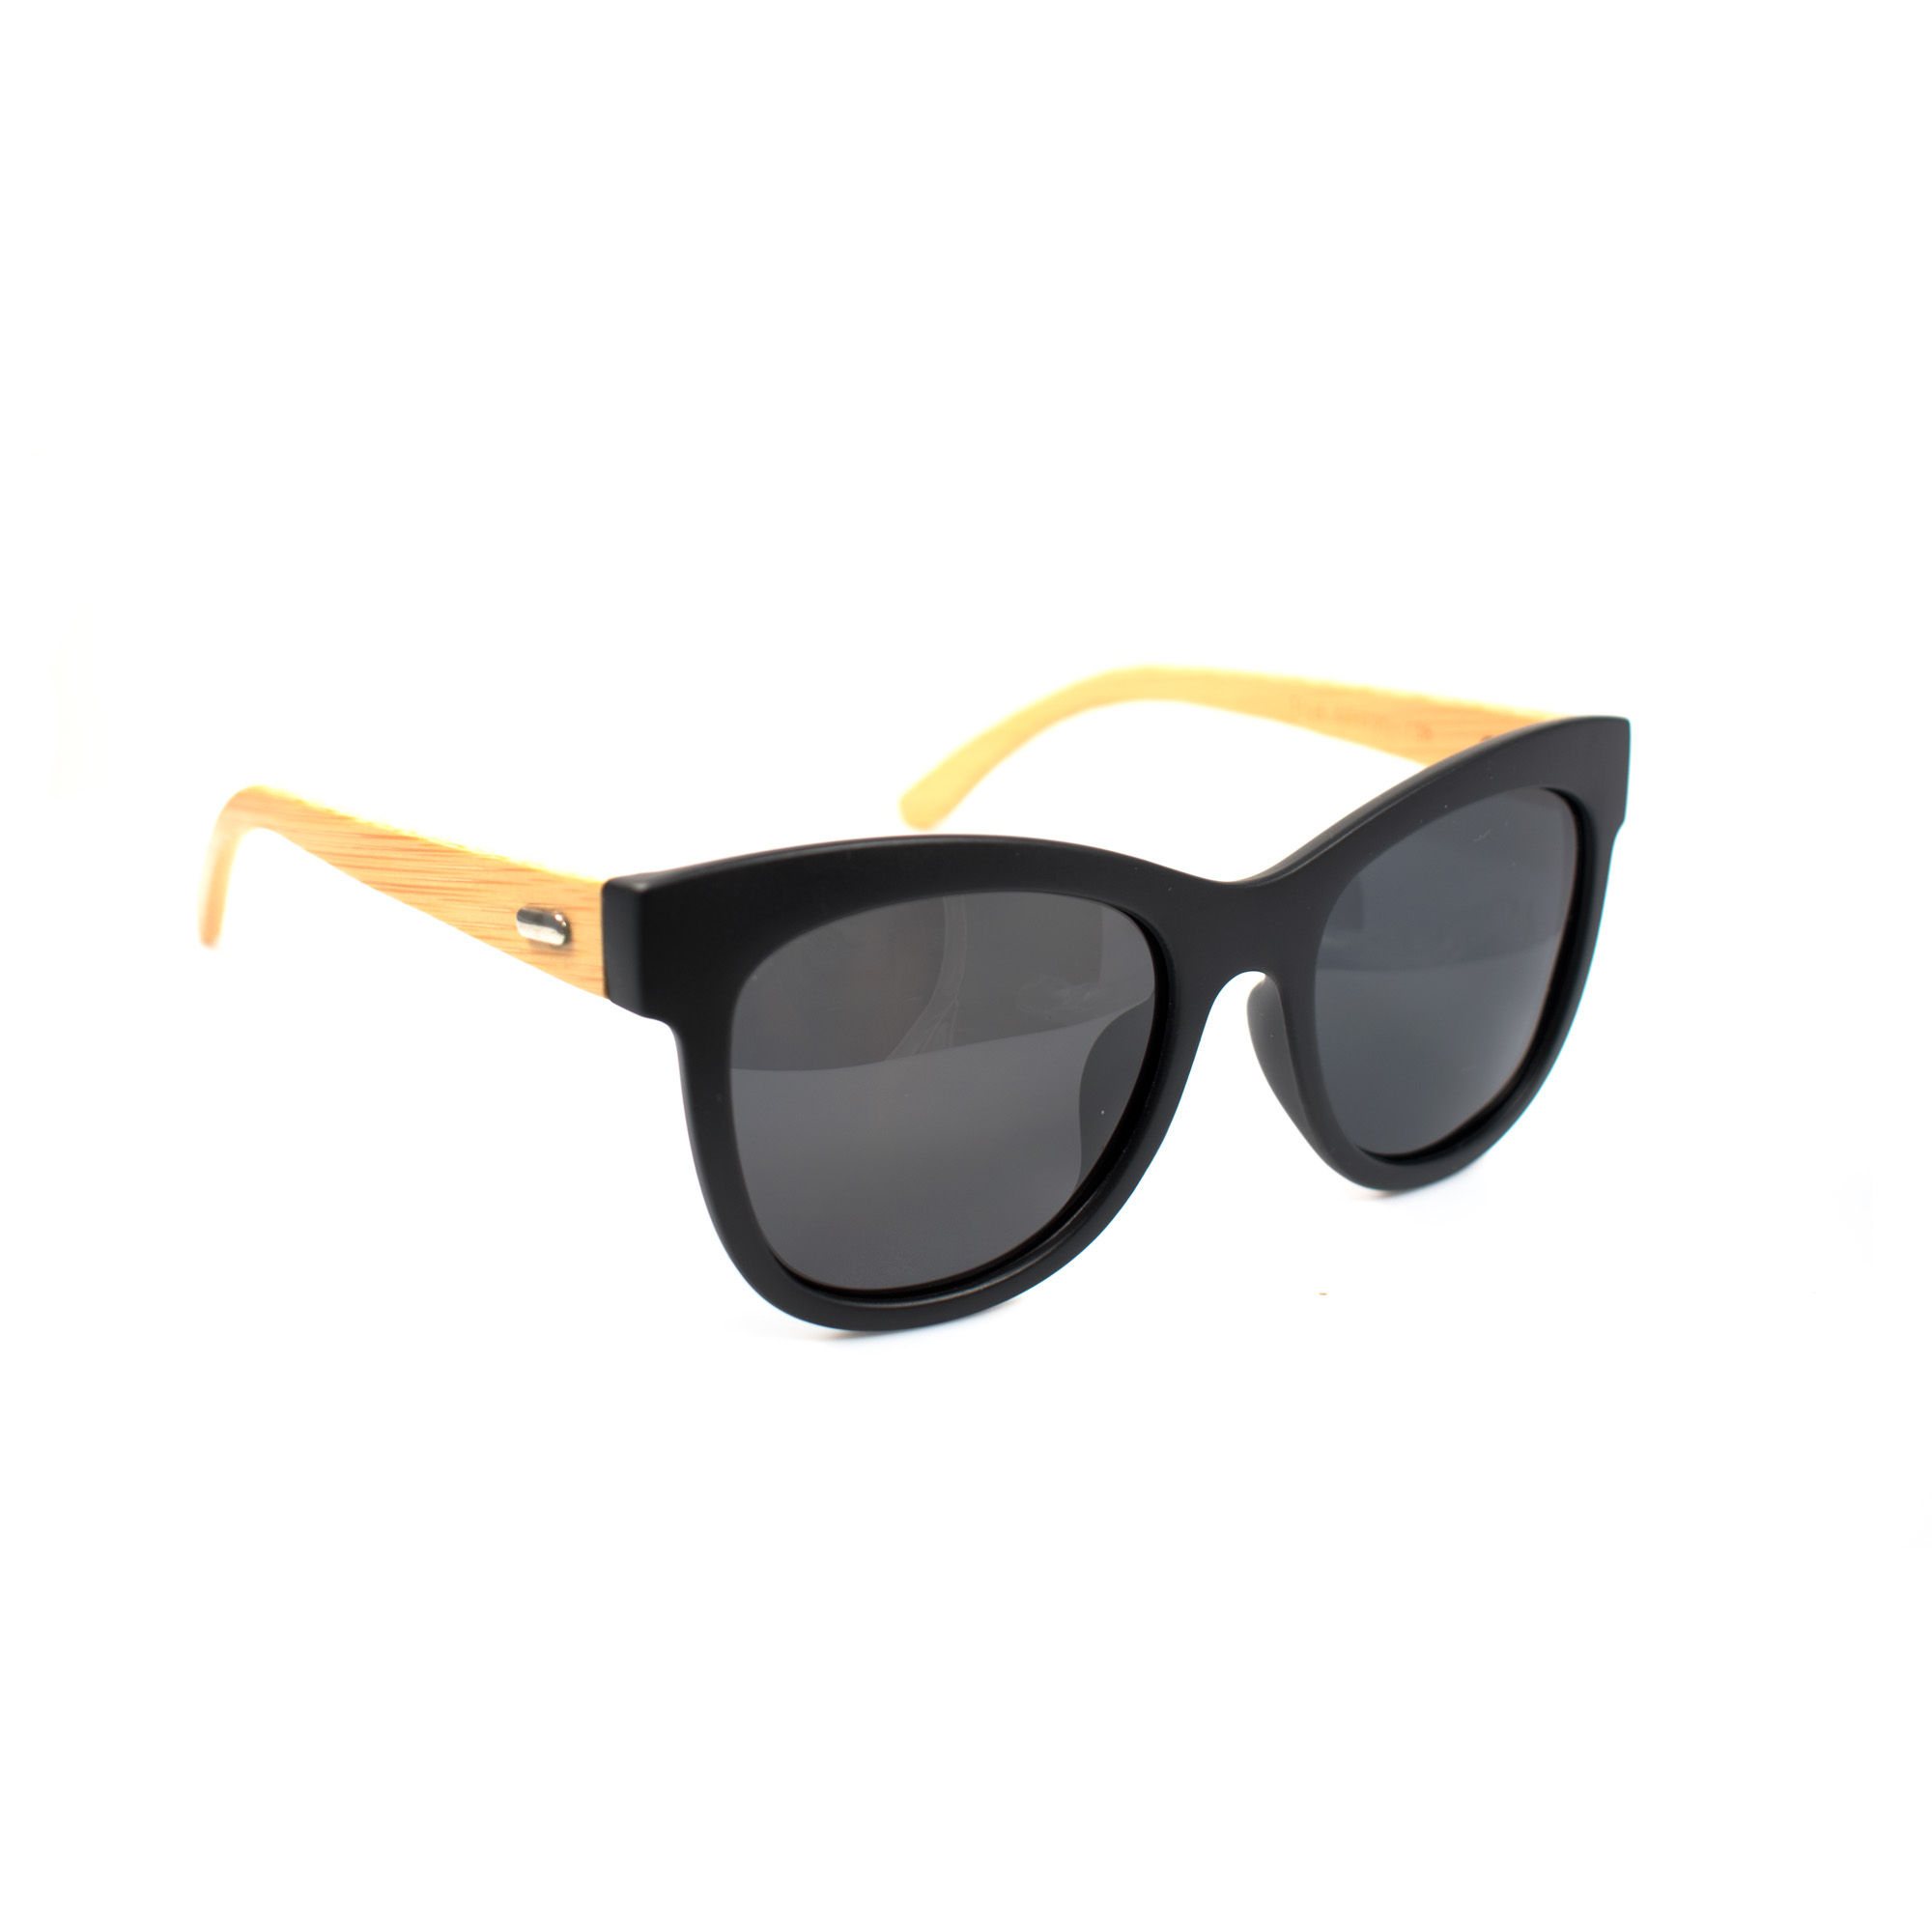 Henry Bamboo Temple Wayfarer Polarized Sunglasses